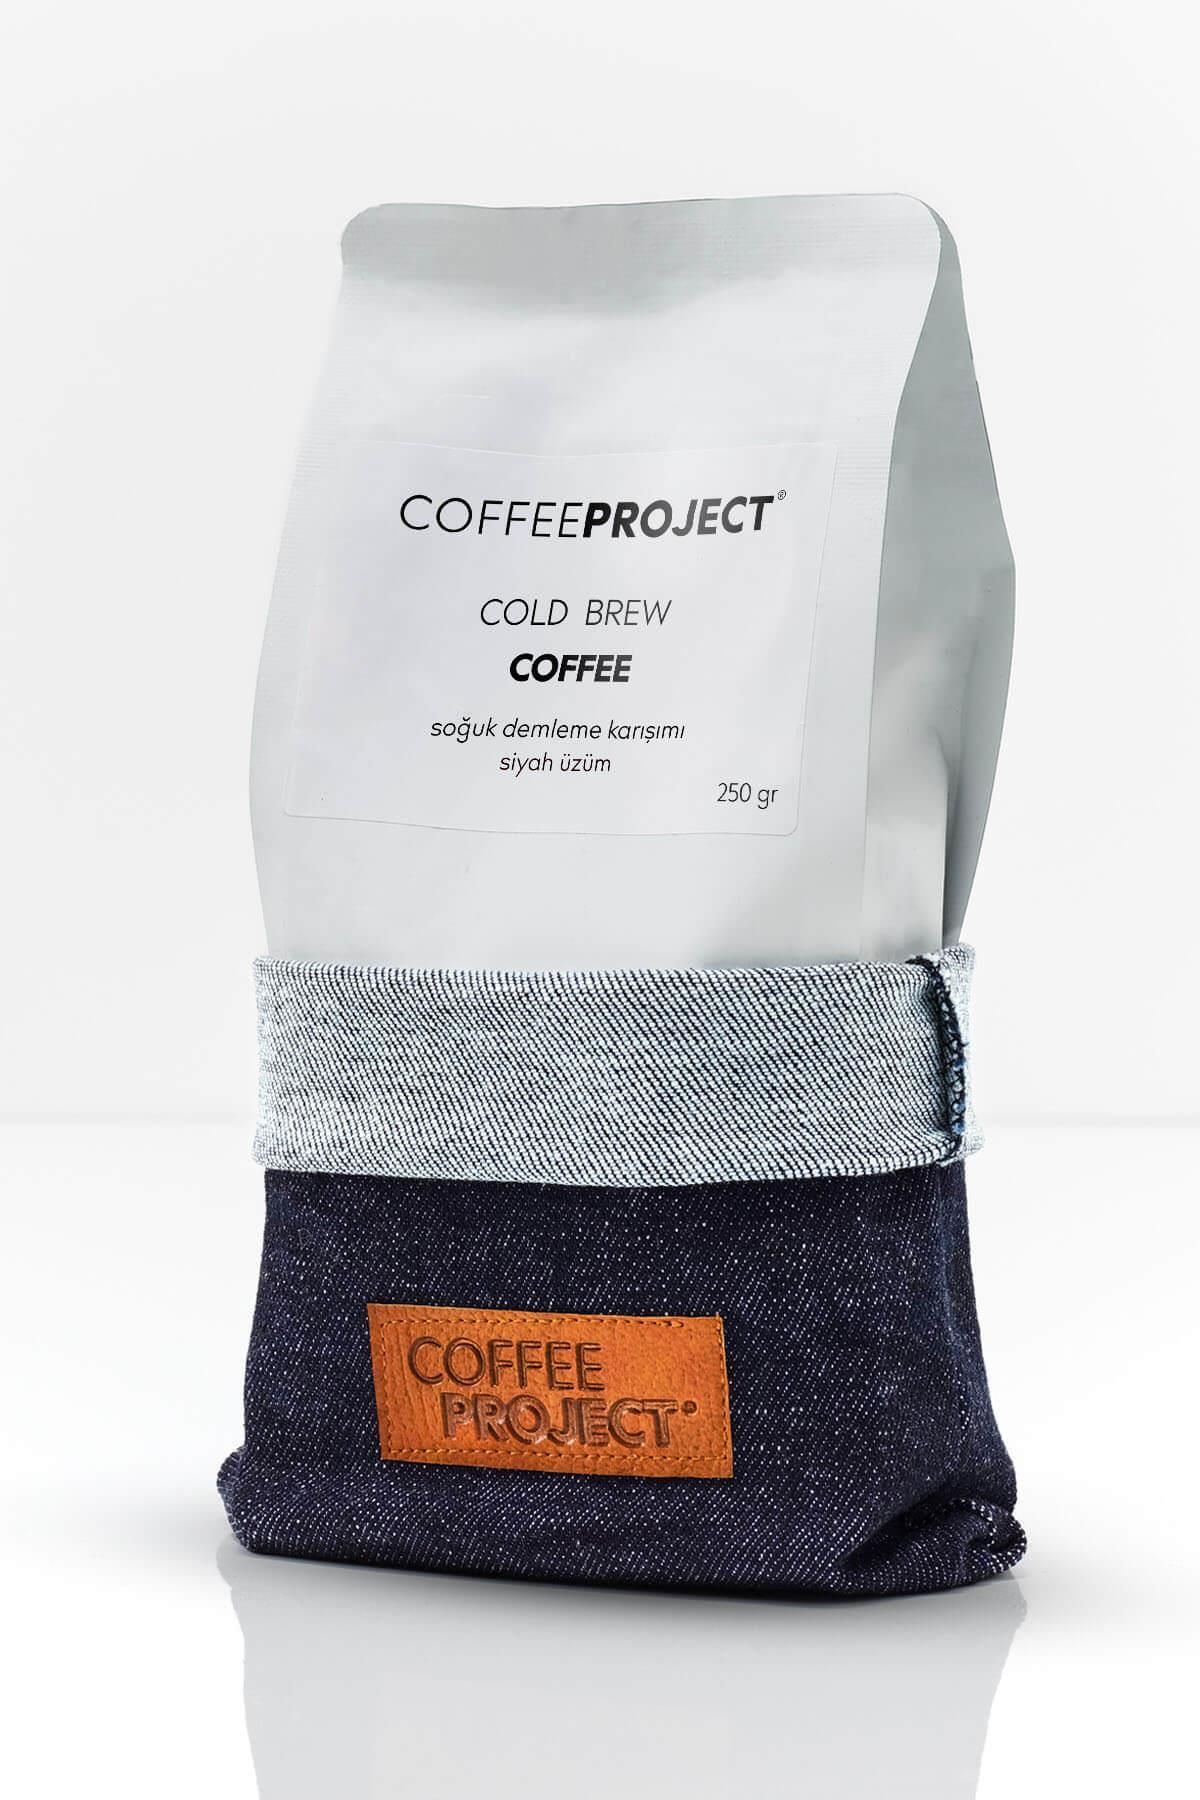 Coffee Project Cold Brew Coffee - Soğuk Demleme Kahvesi 250 gr